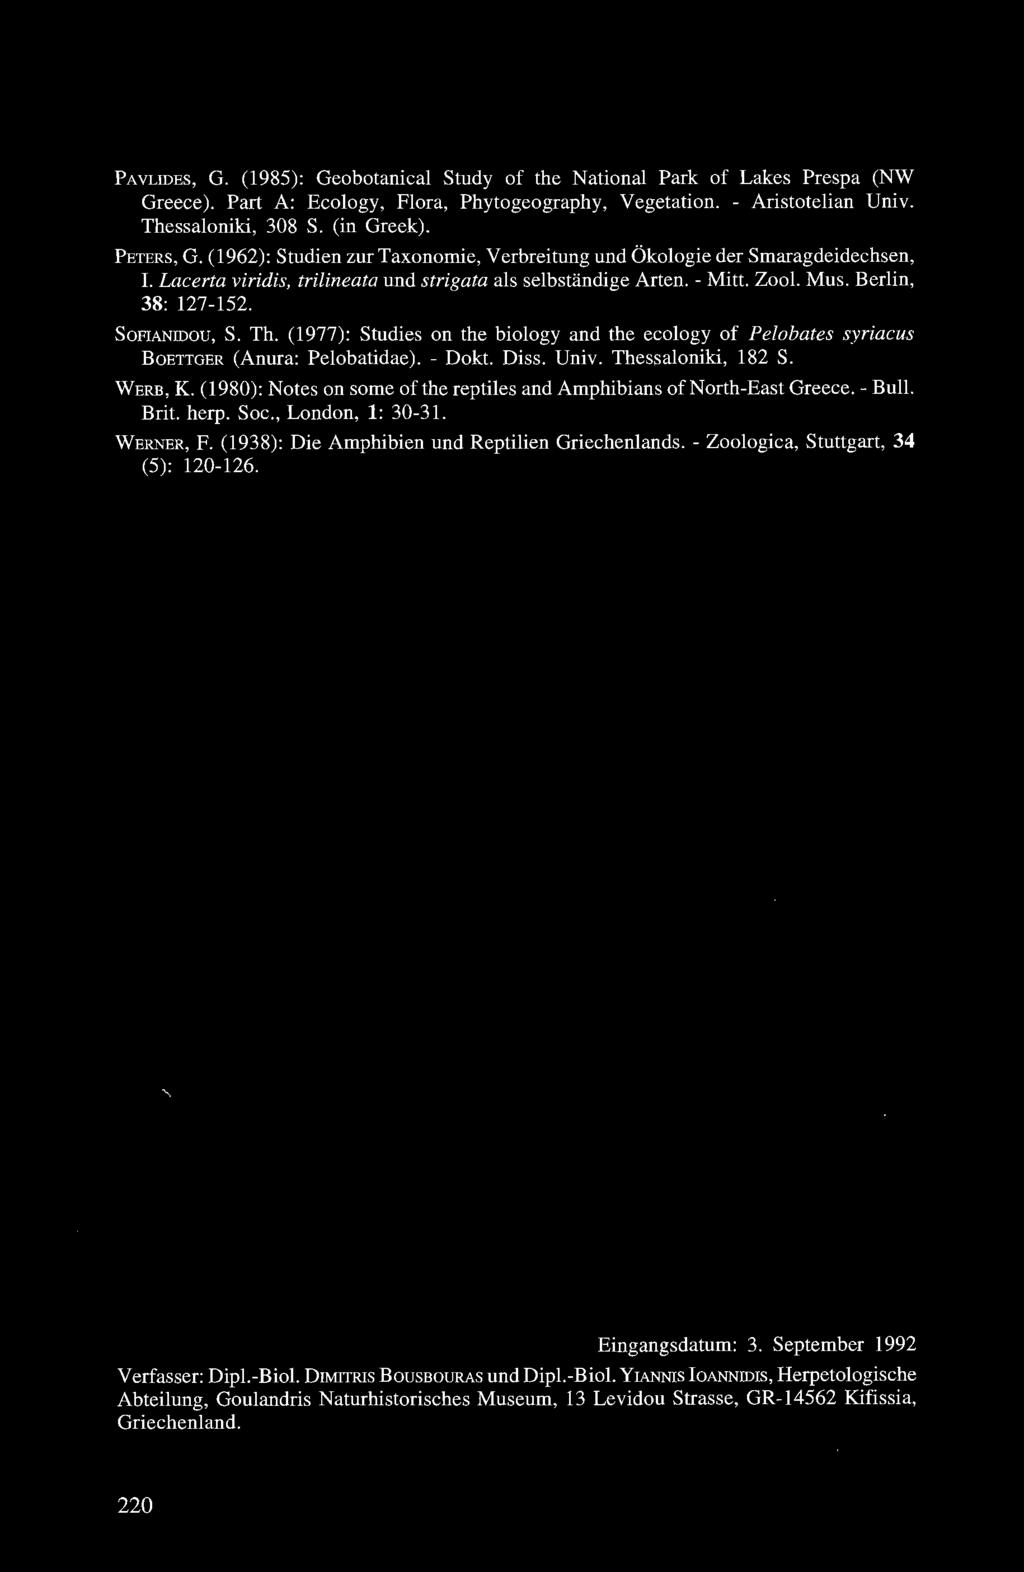 SOFIANIDOU, S. Th. (1977): Studies on the biology and the ecology of Pelobates syriacus BOETTGER (Anura: Pelobatidae). - Dokt. Diss. Univ. Thessaloniki, 182 S. WERB, K.